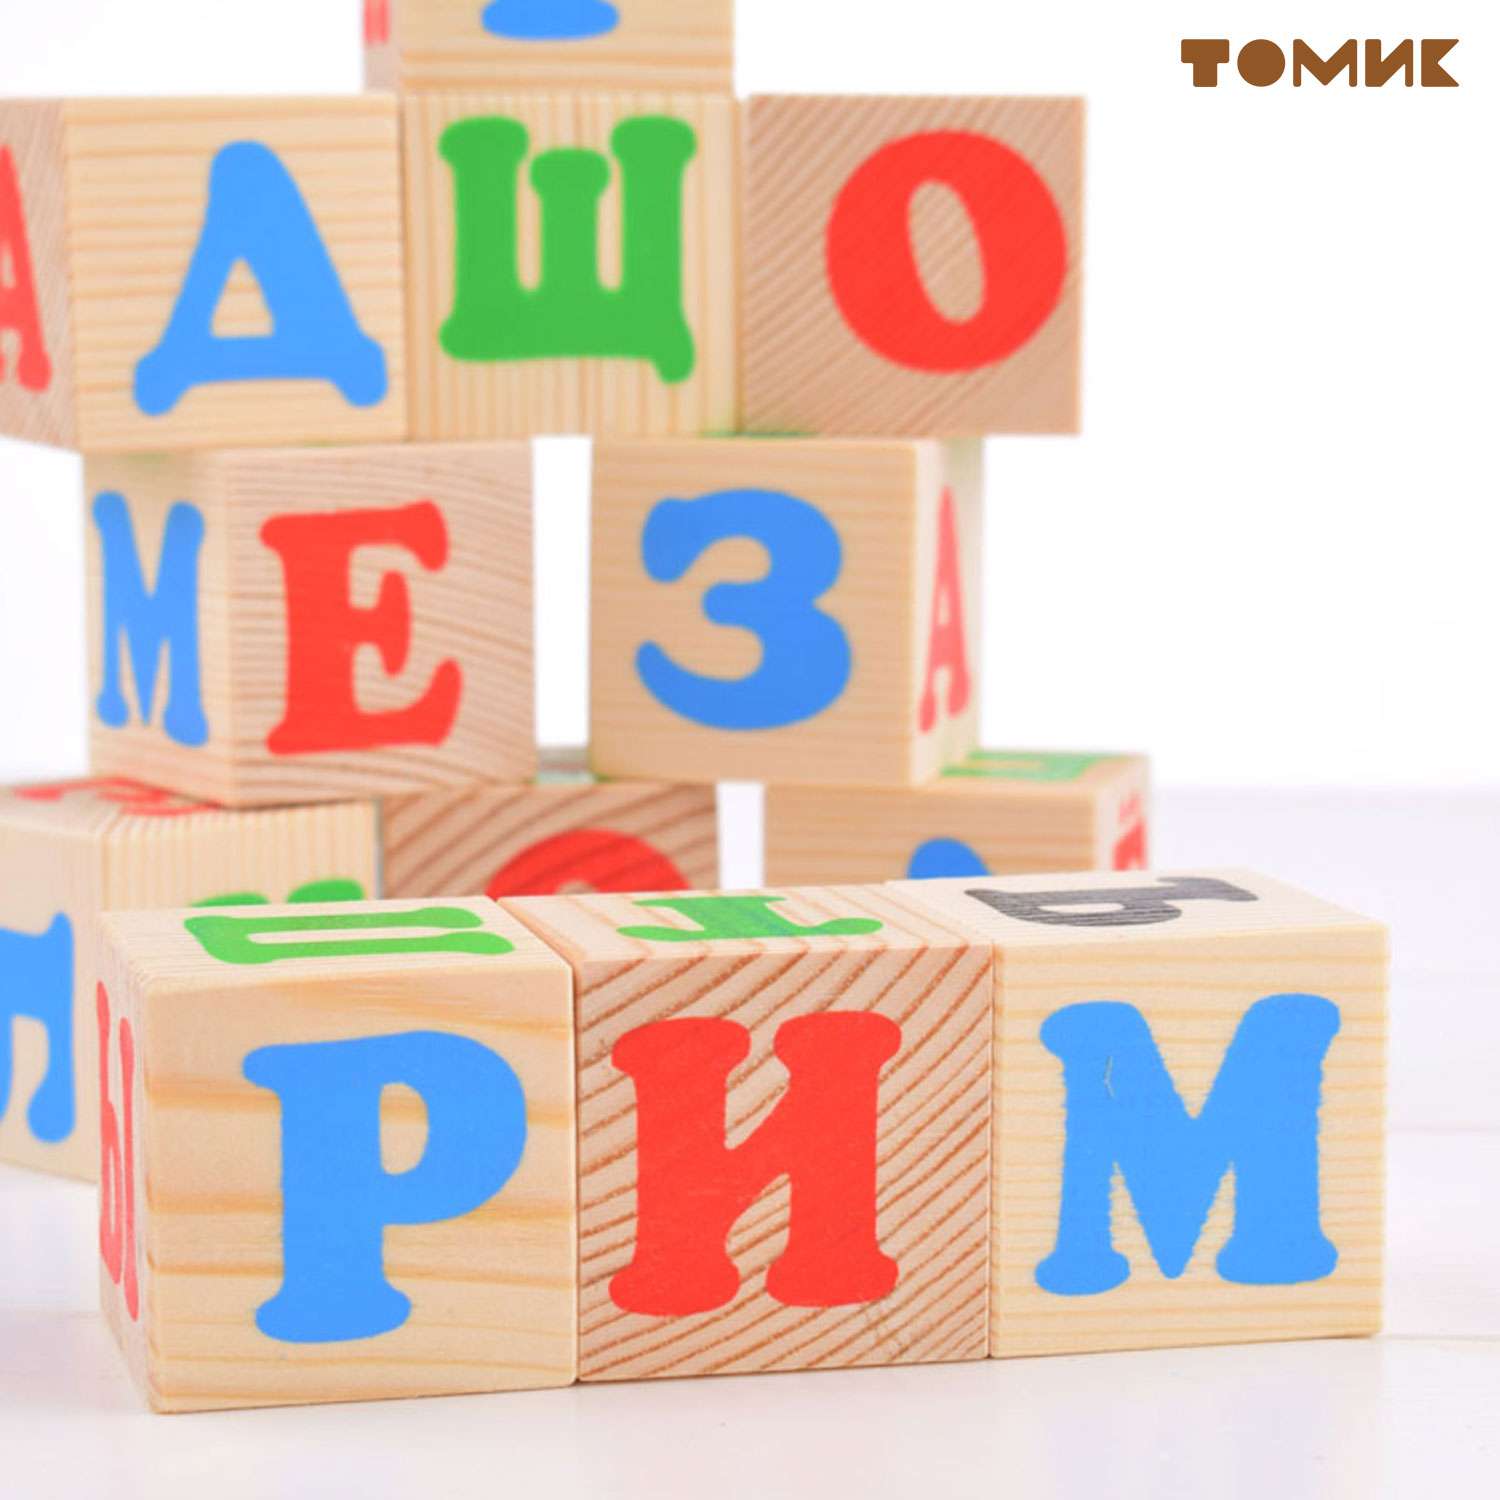 Кубики Томик Алфавит русский 12 штук 1111-1 - фото 13